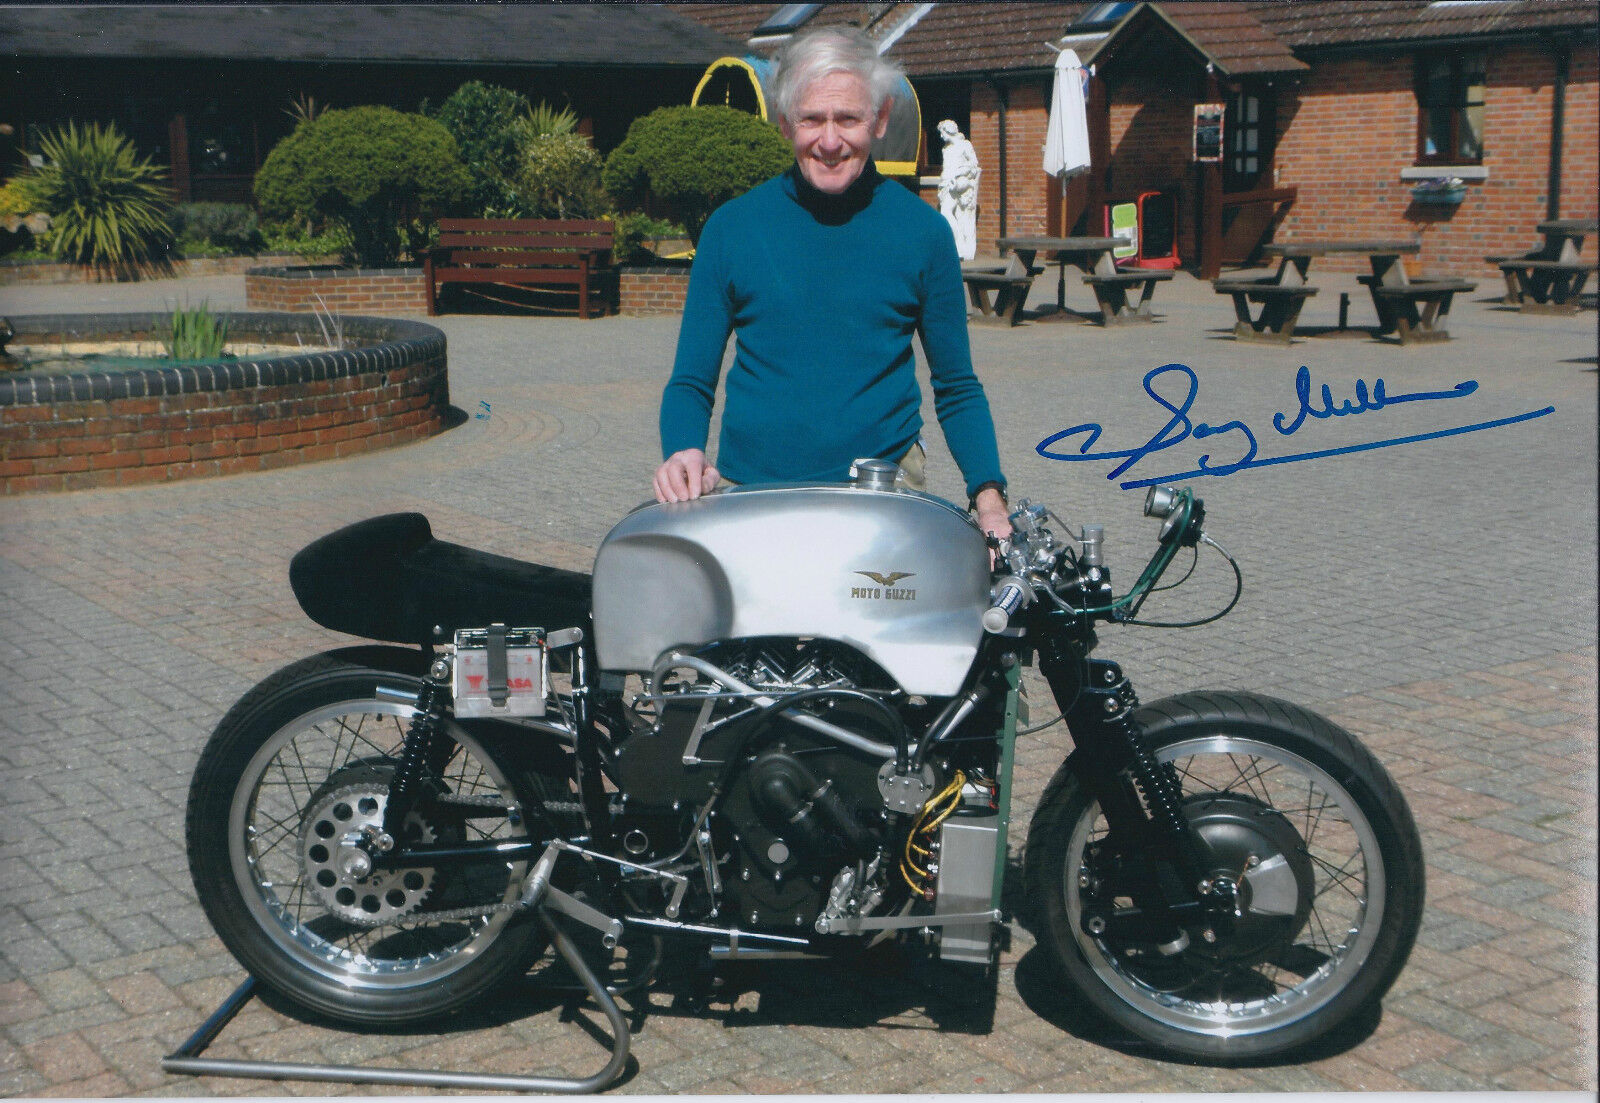 Sammy Miller SIGNED MOTO GUZZI TT Racing Legend 12x8 Photo Poster painting AFTAL Autograph COA